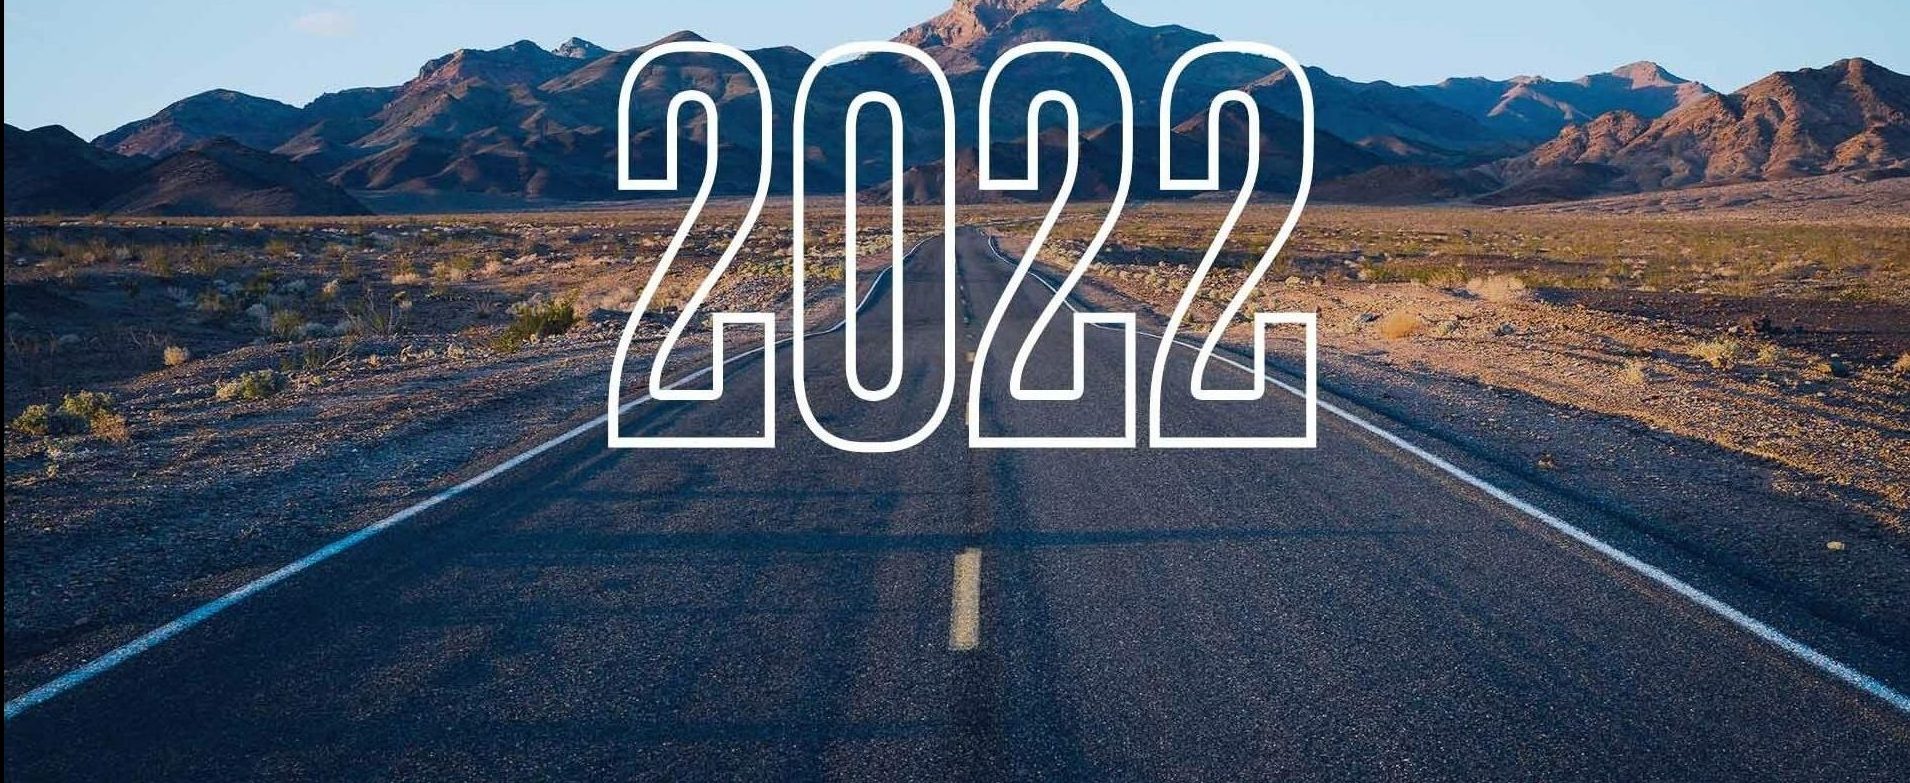 azure certification for 2022